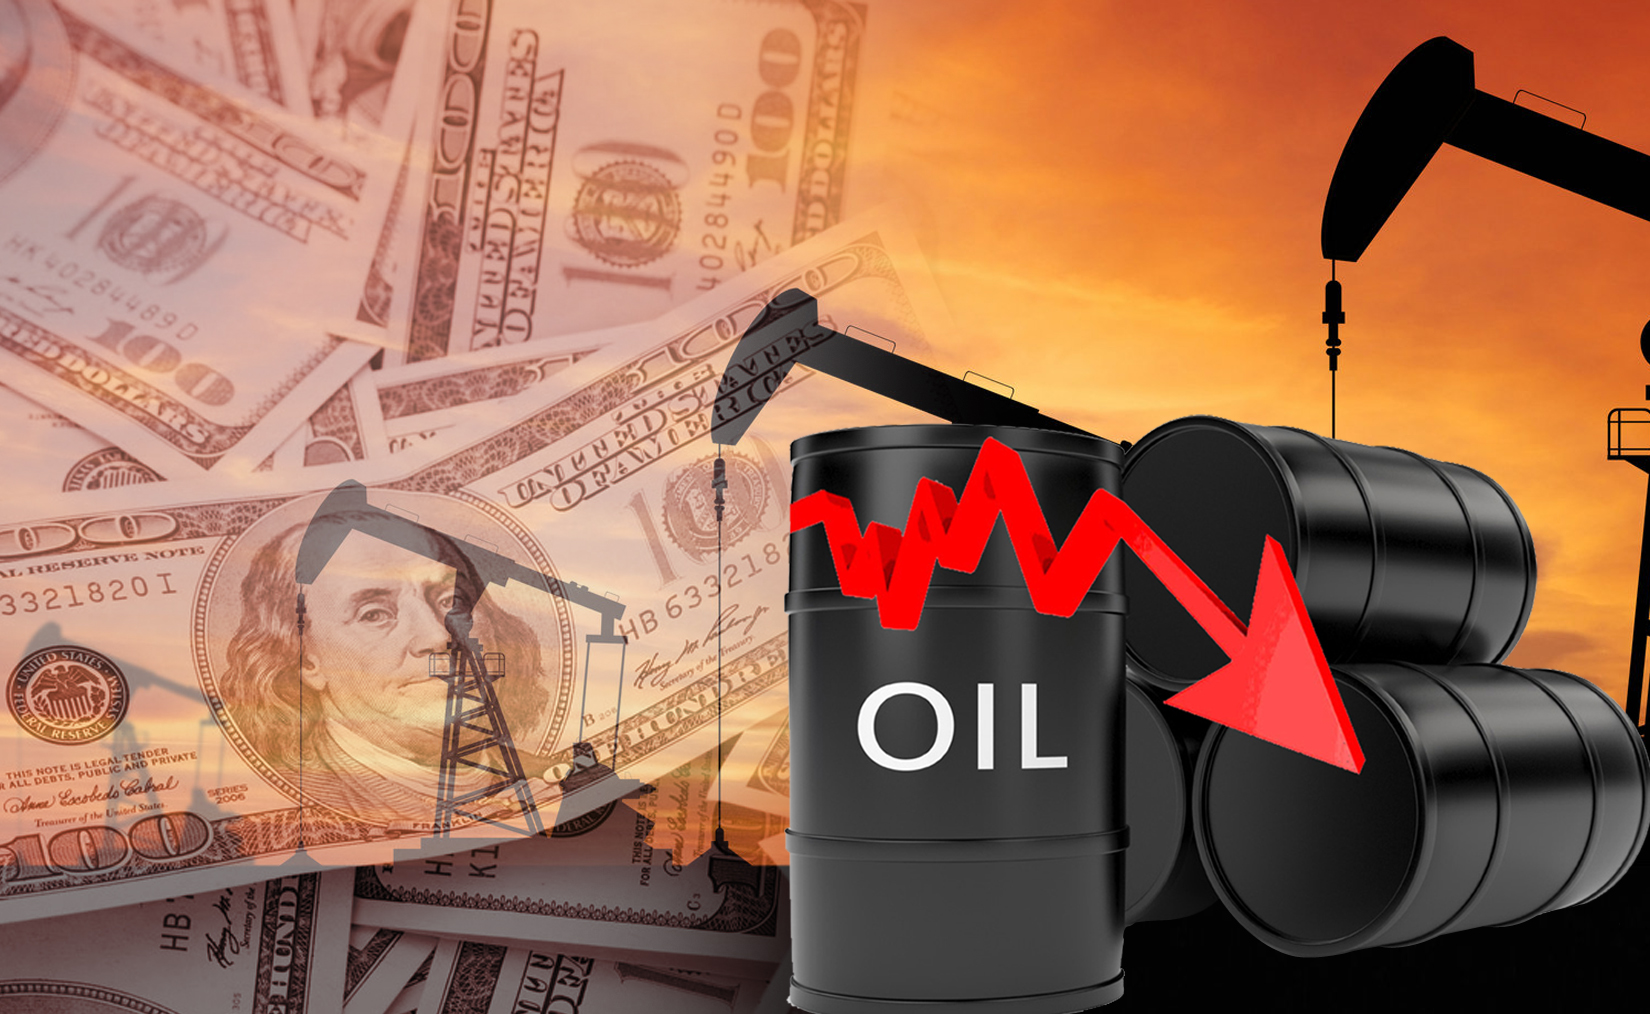 Kuwait oil price down 97 cents to USD 63.76 pb                                                                                                                                                                                                            